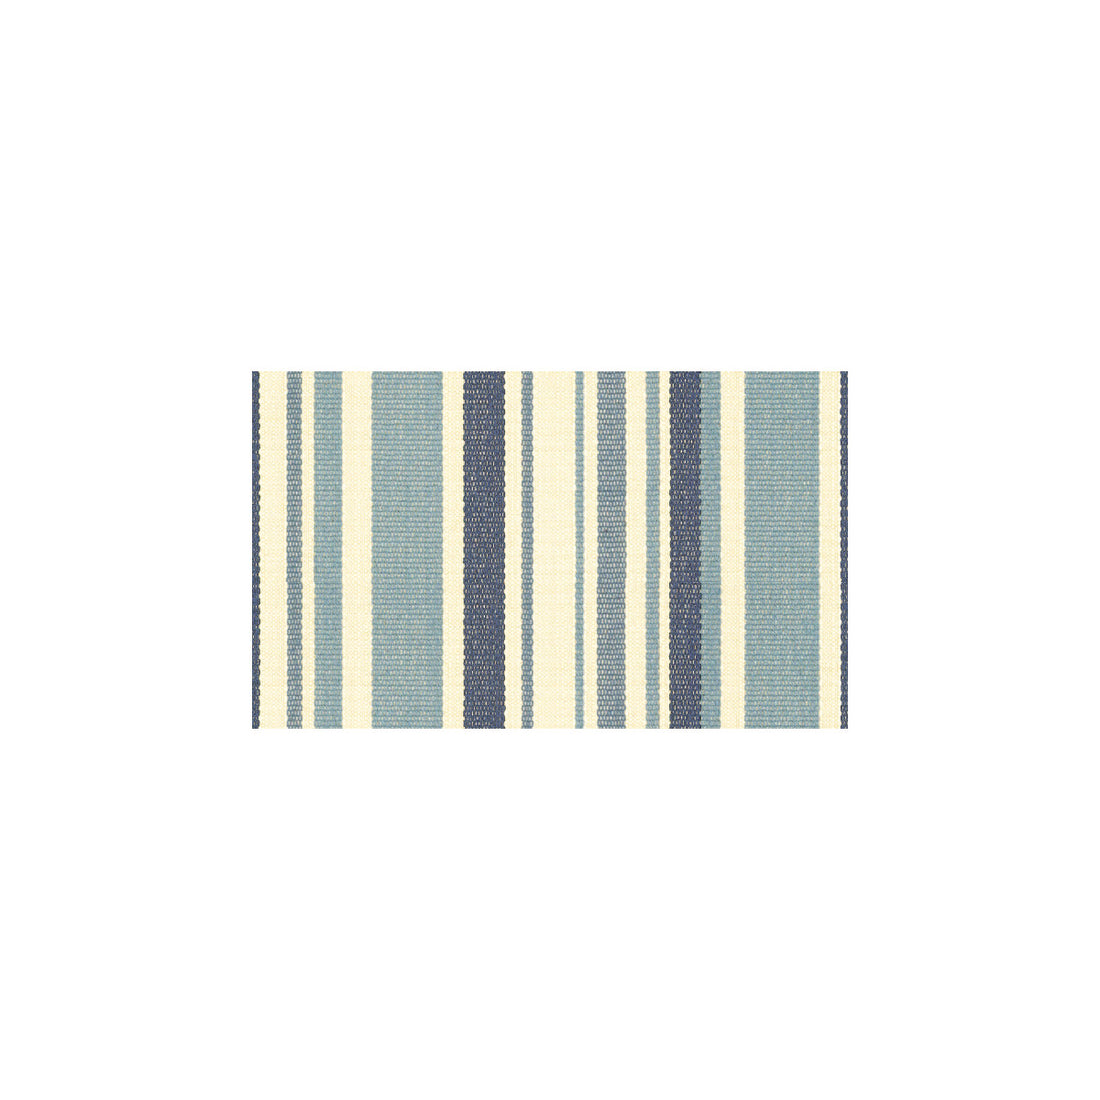 Kravet Design fabric in 31387-516 color - pattern 31387.516.0 - by Kravet Design in the Gis collection